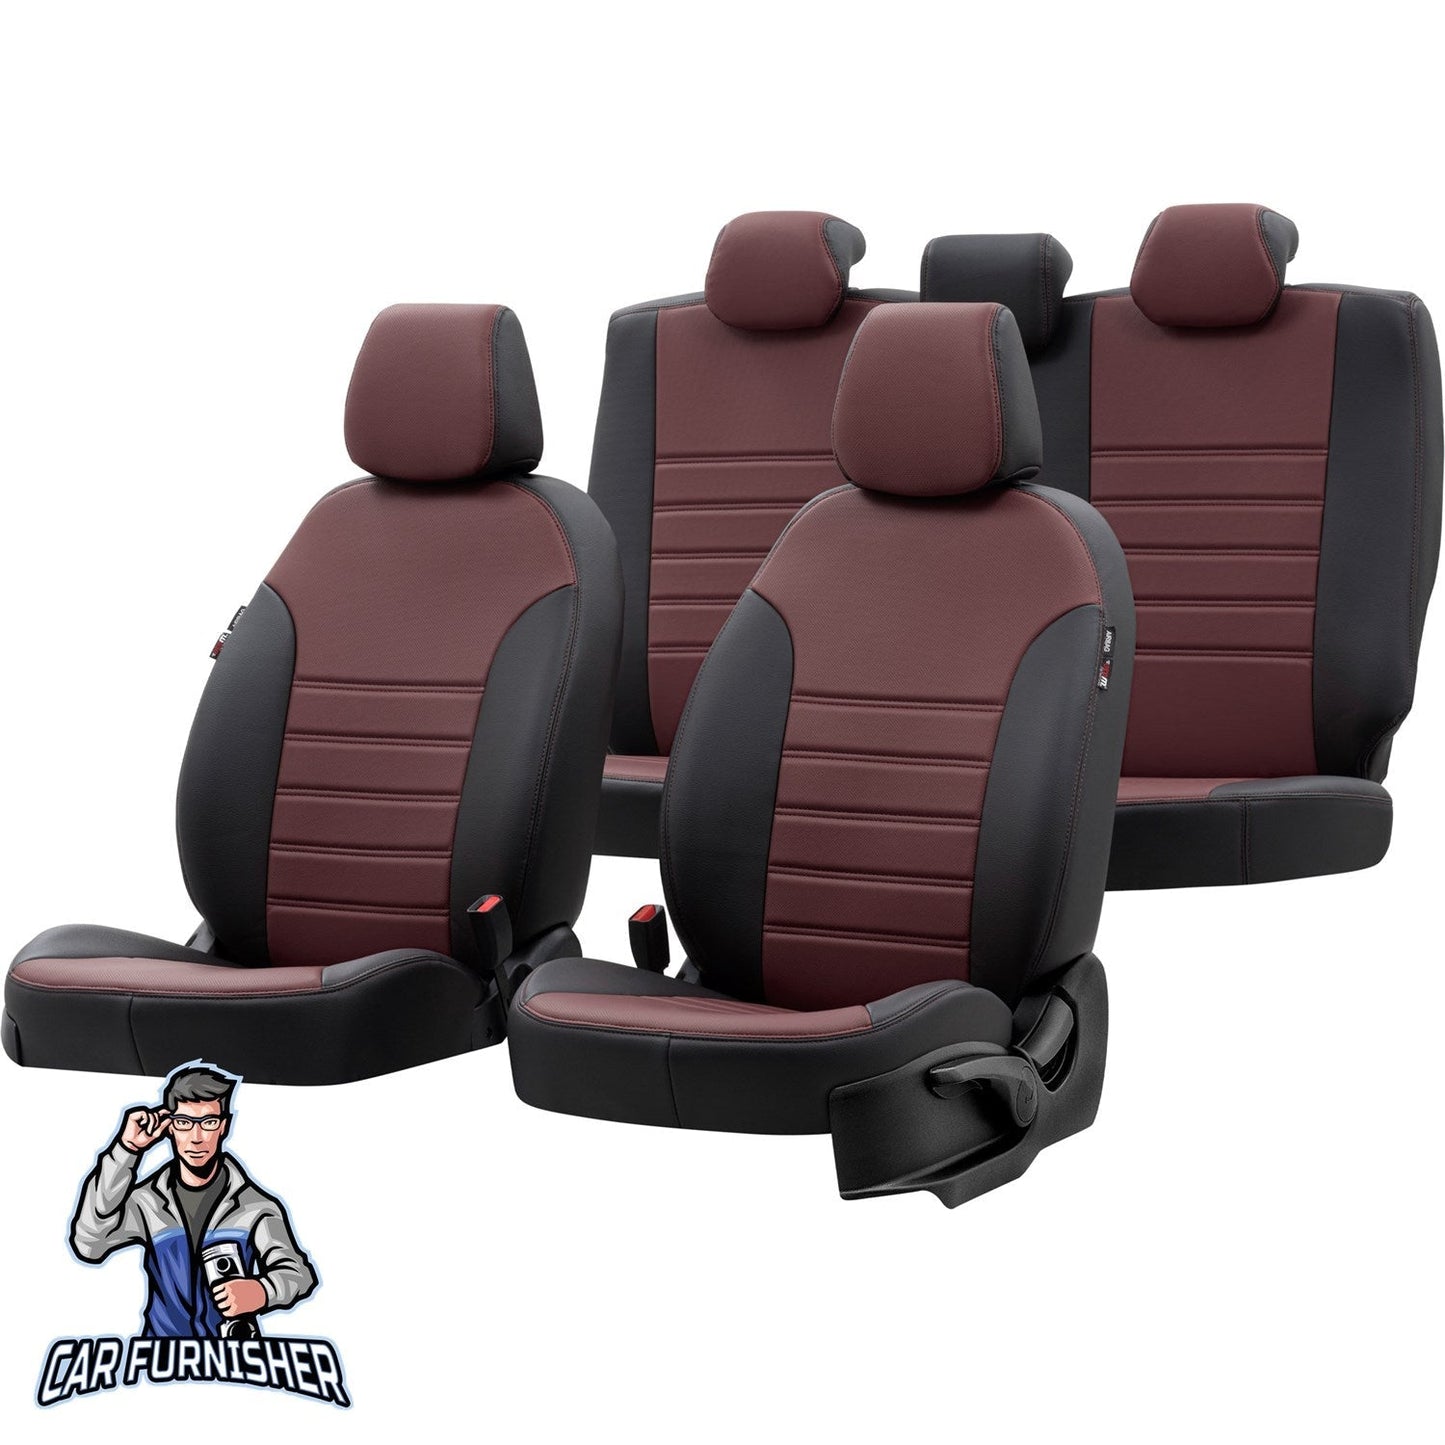 Suzuki Baleno Seat Covers Istanbul Leather Design Burgundy Leather